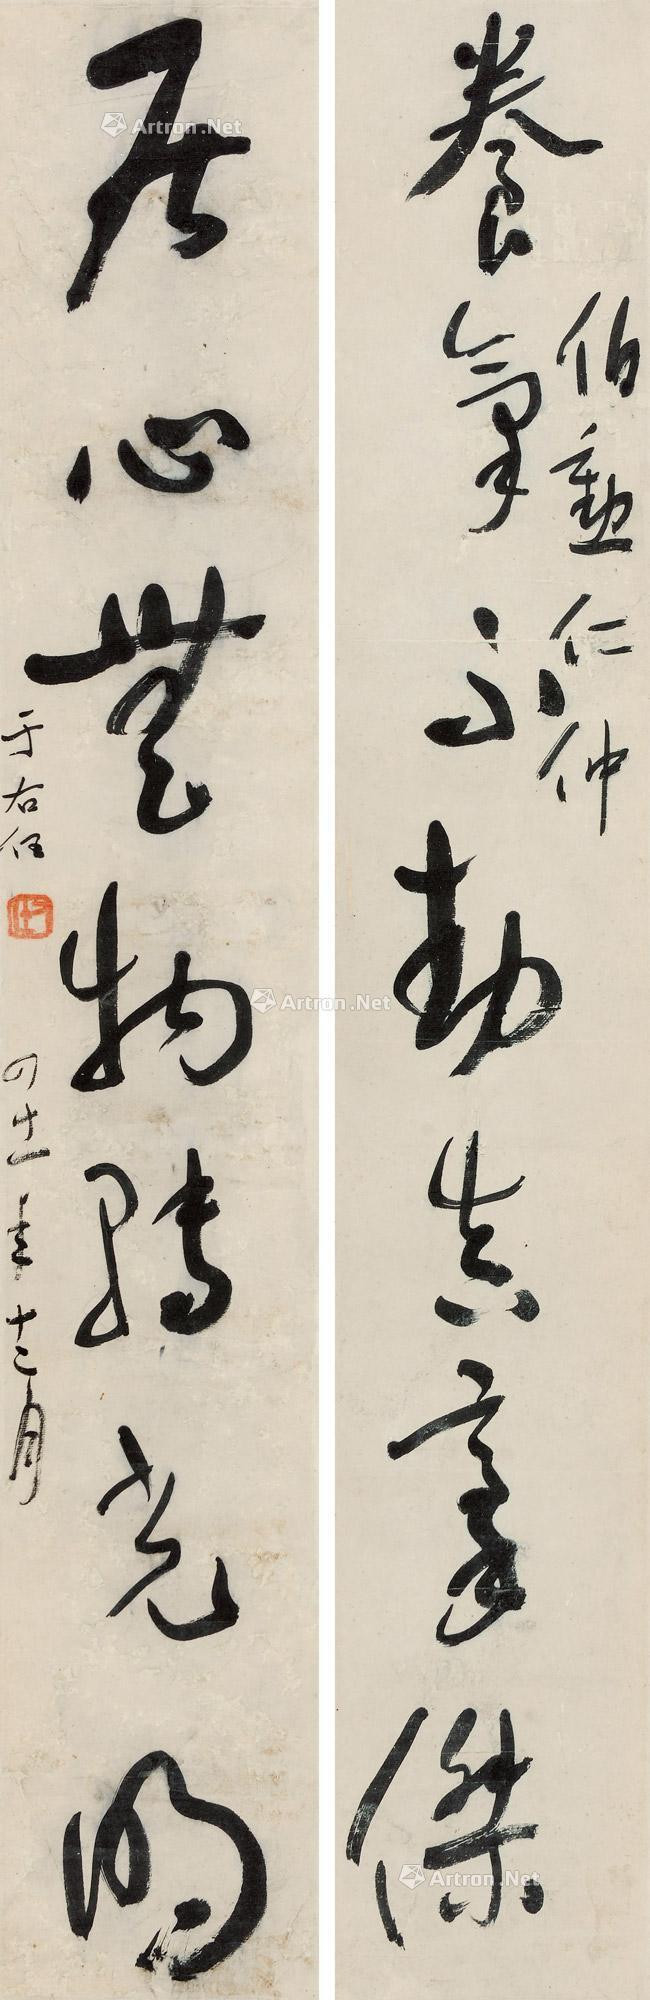 Calligraphy in Cursive Script